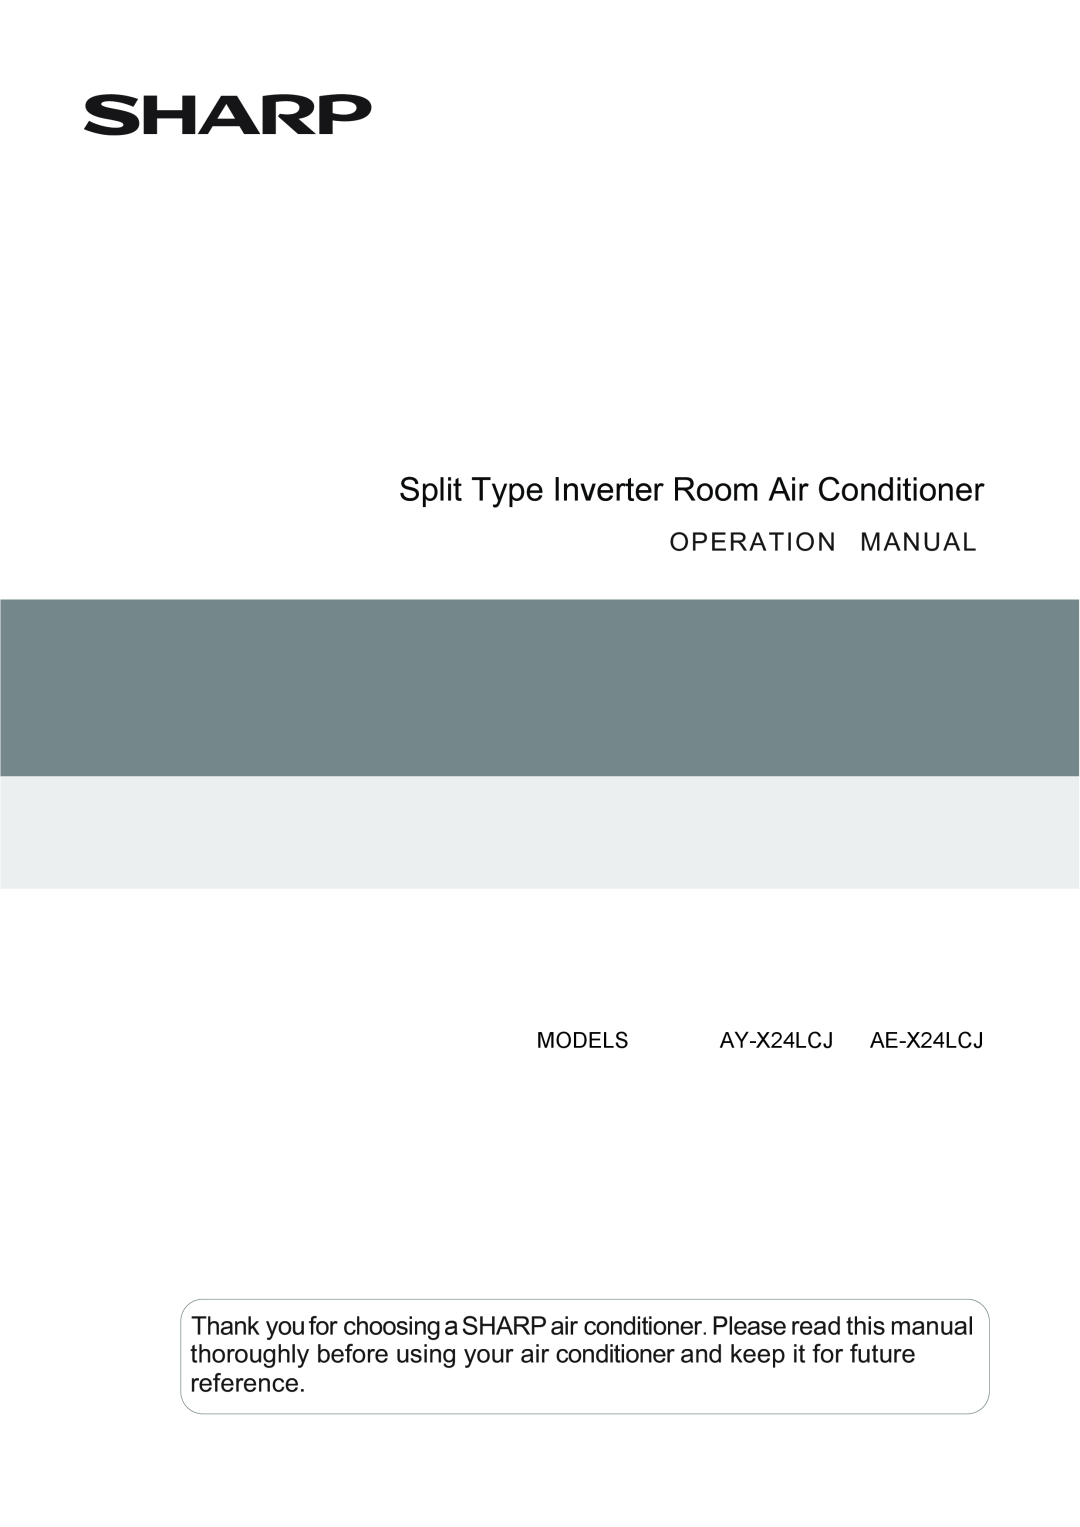 Sharp operation manual Split Type Inverter Room Air Conditioner, Models, AY-X24LCJ AE-X24LCJ 